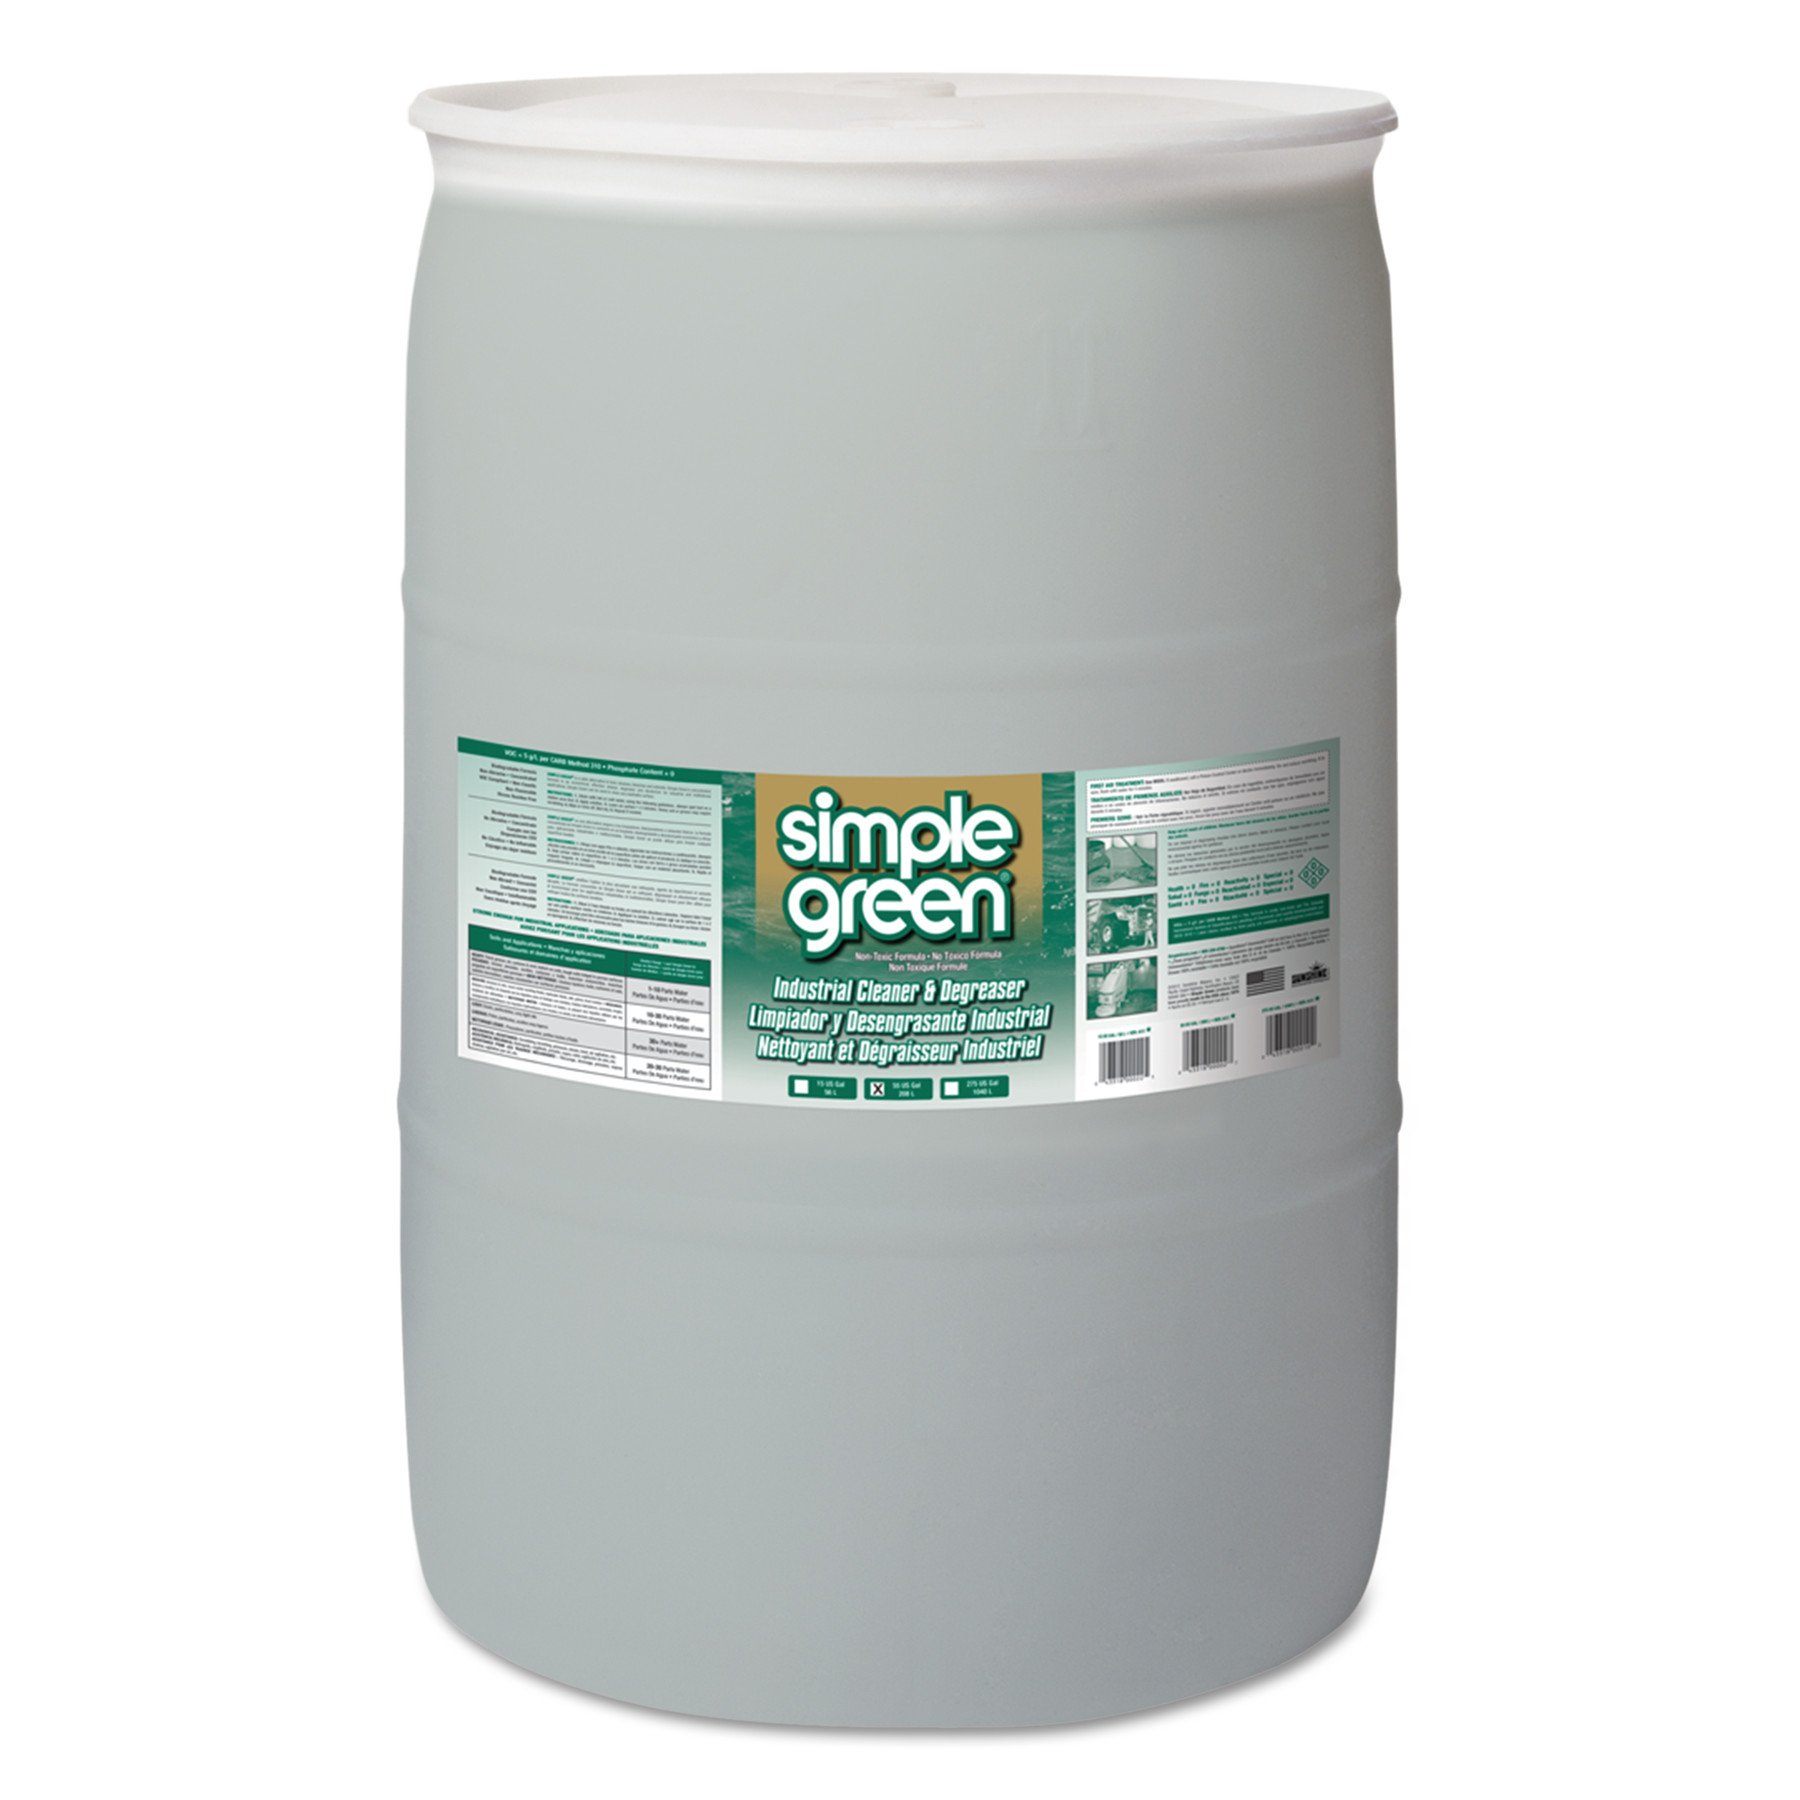 Simple Green 13008 浓缩工业清洁剂和除油剂，55 加仑桶装...